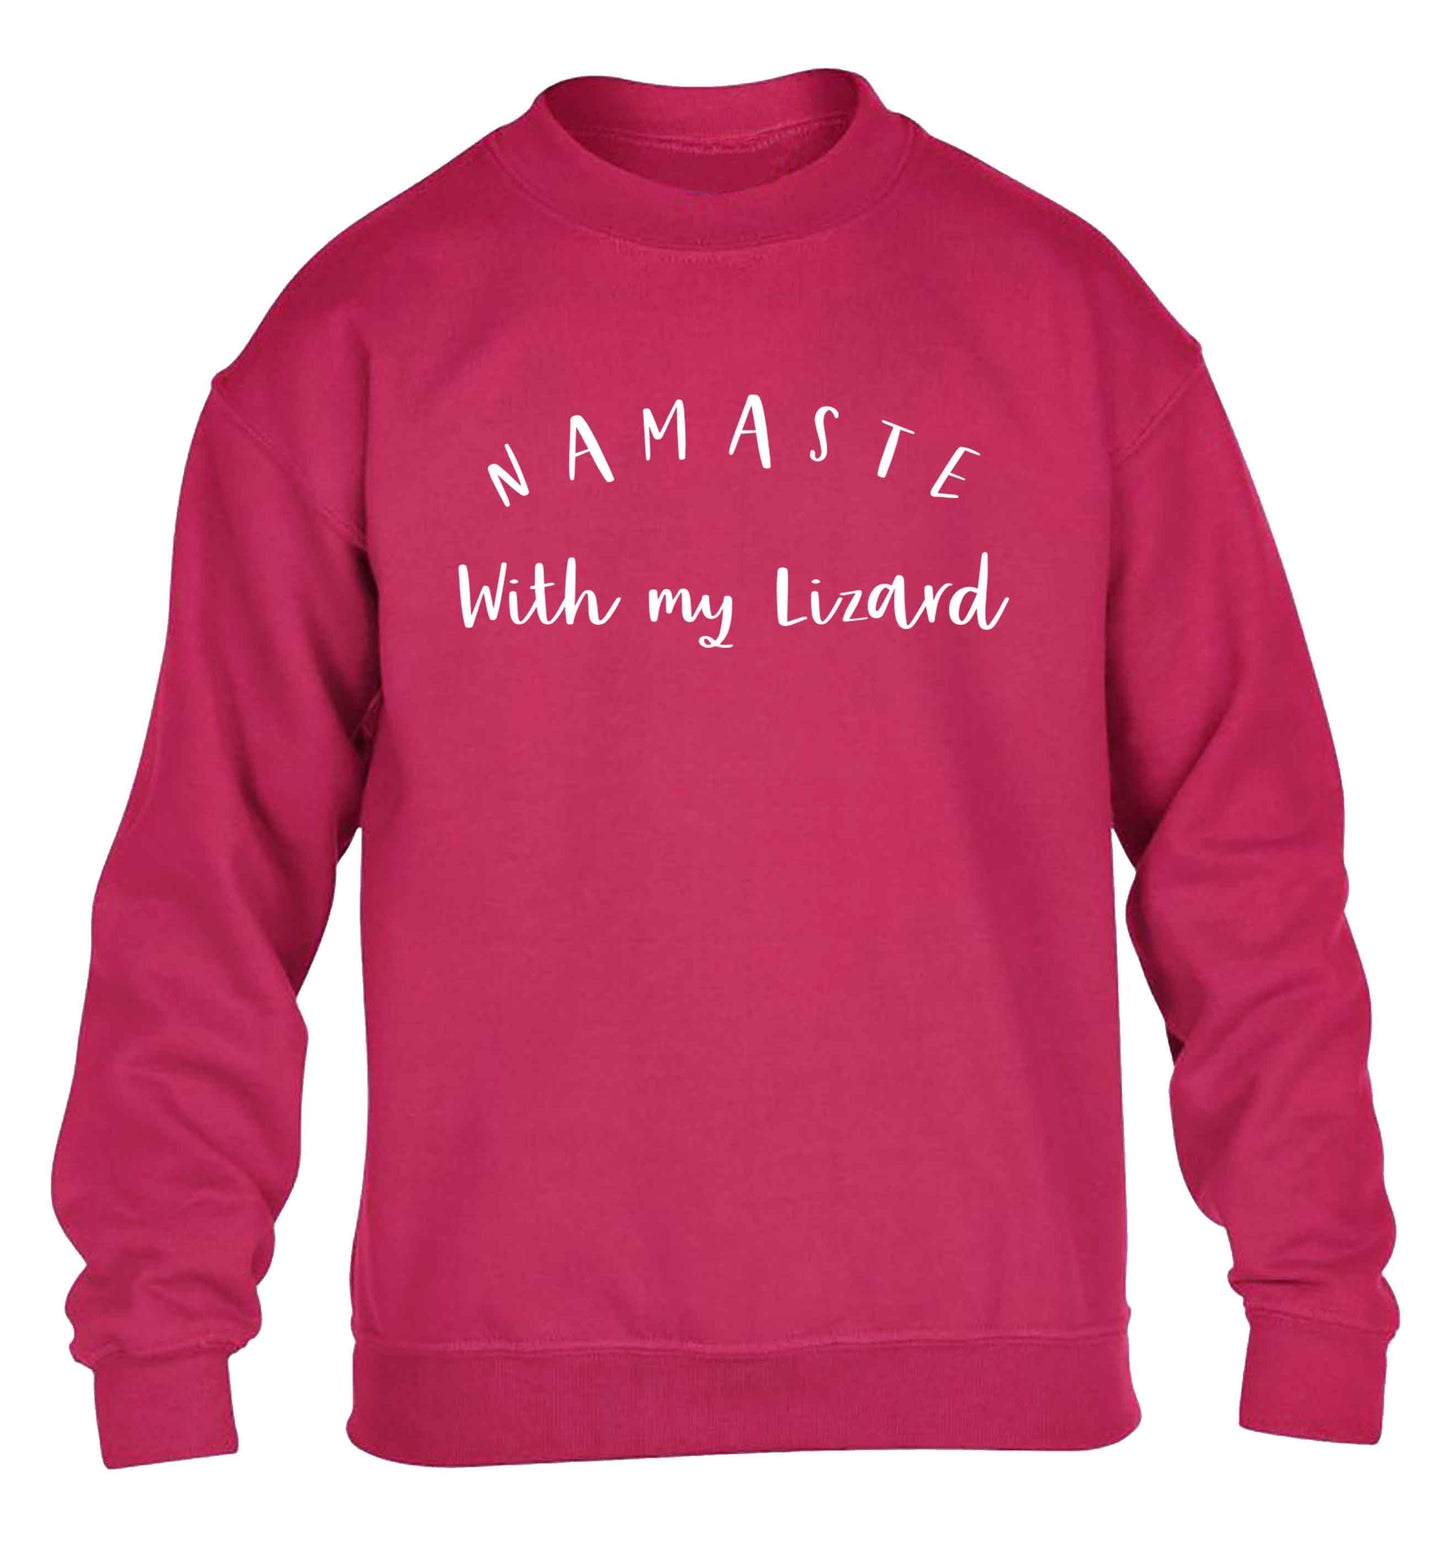 Namaste with my lizard children's pink sweater 12-13 Years